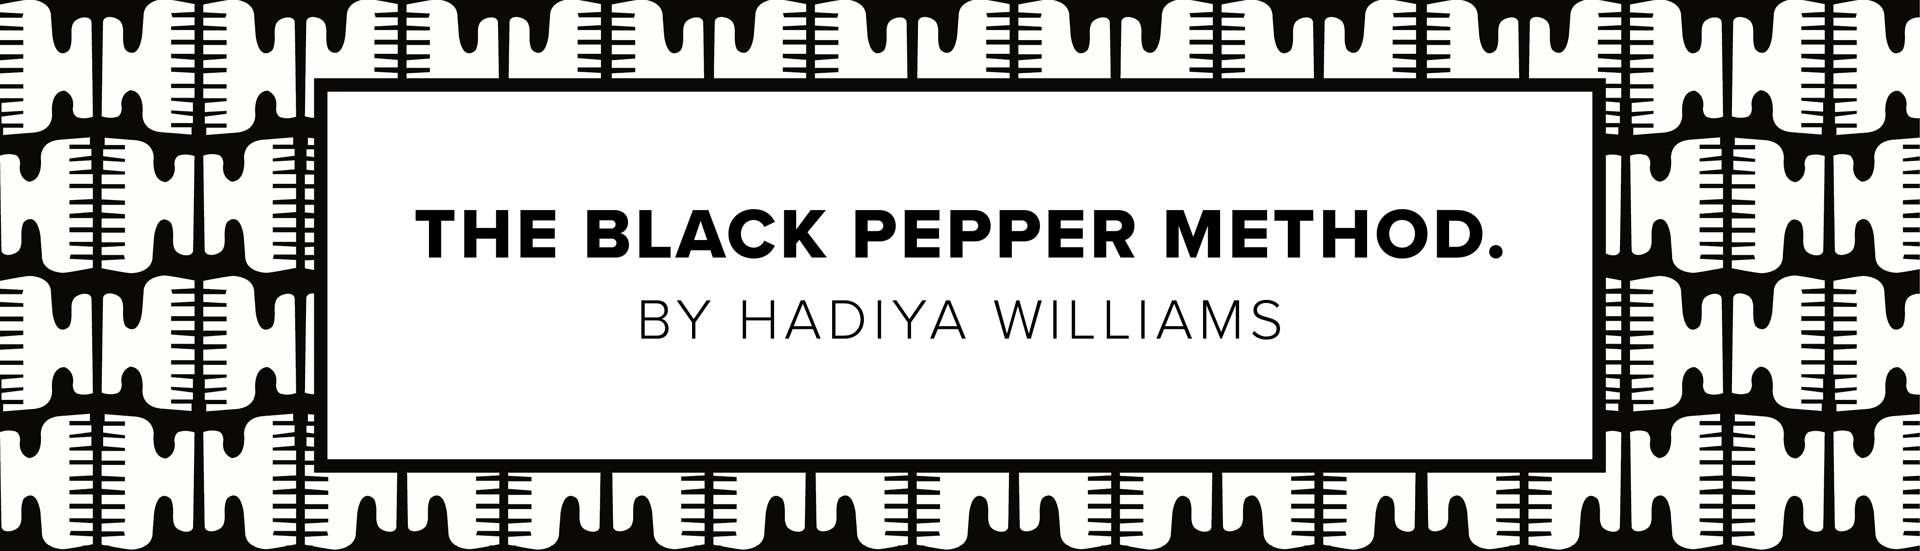 Black Pepper Paperier